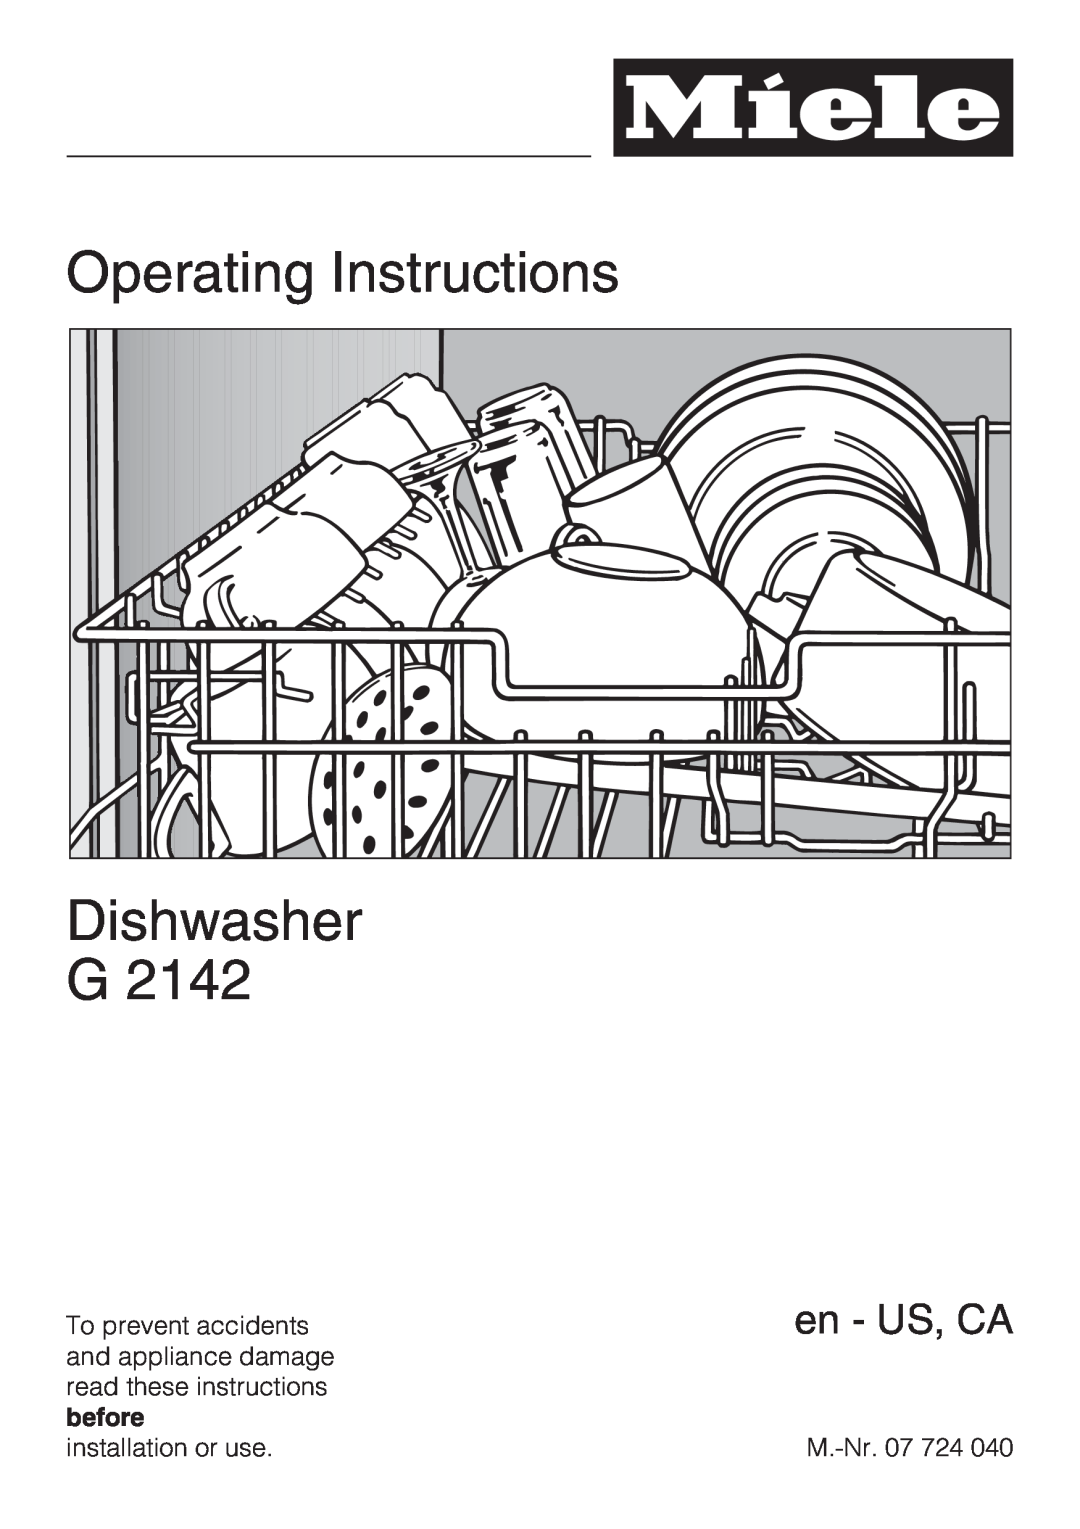 Miele G2142 operating instructions Operating Instructions, Dishwasher, en - US, CA 